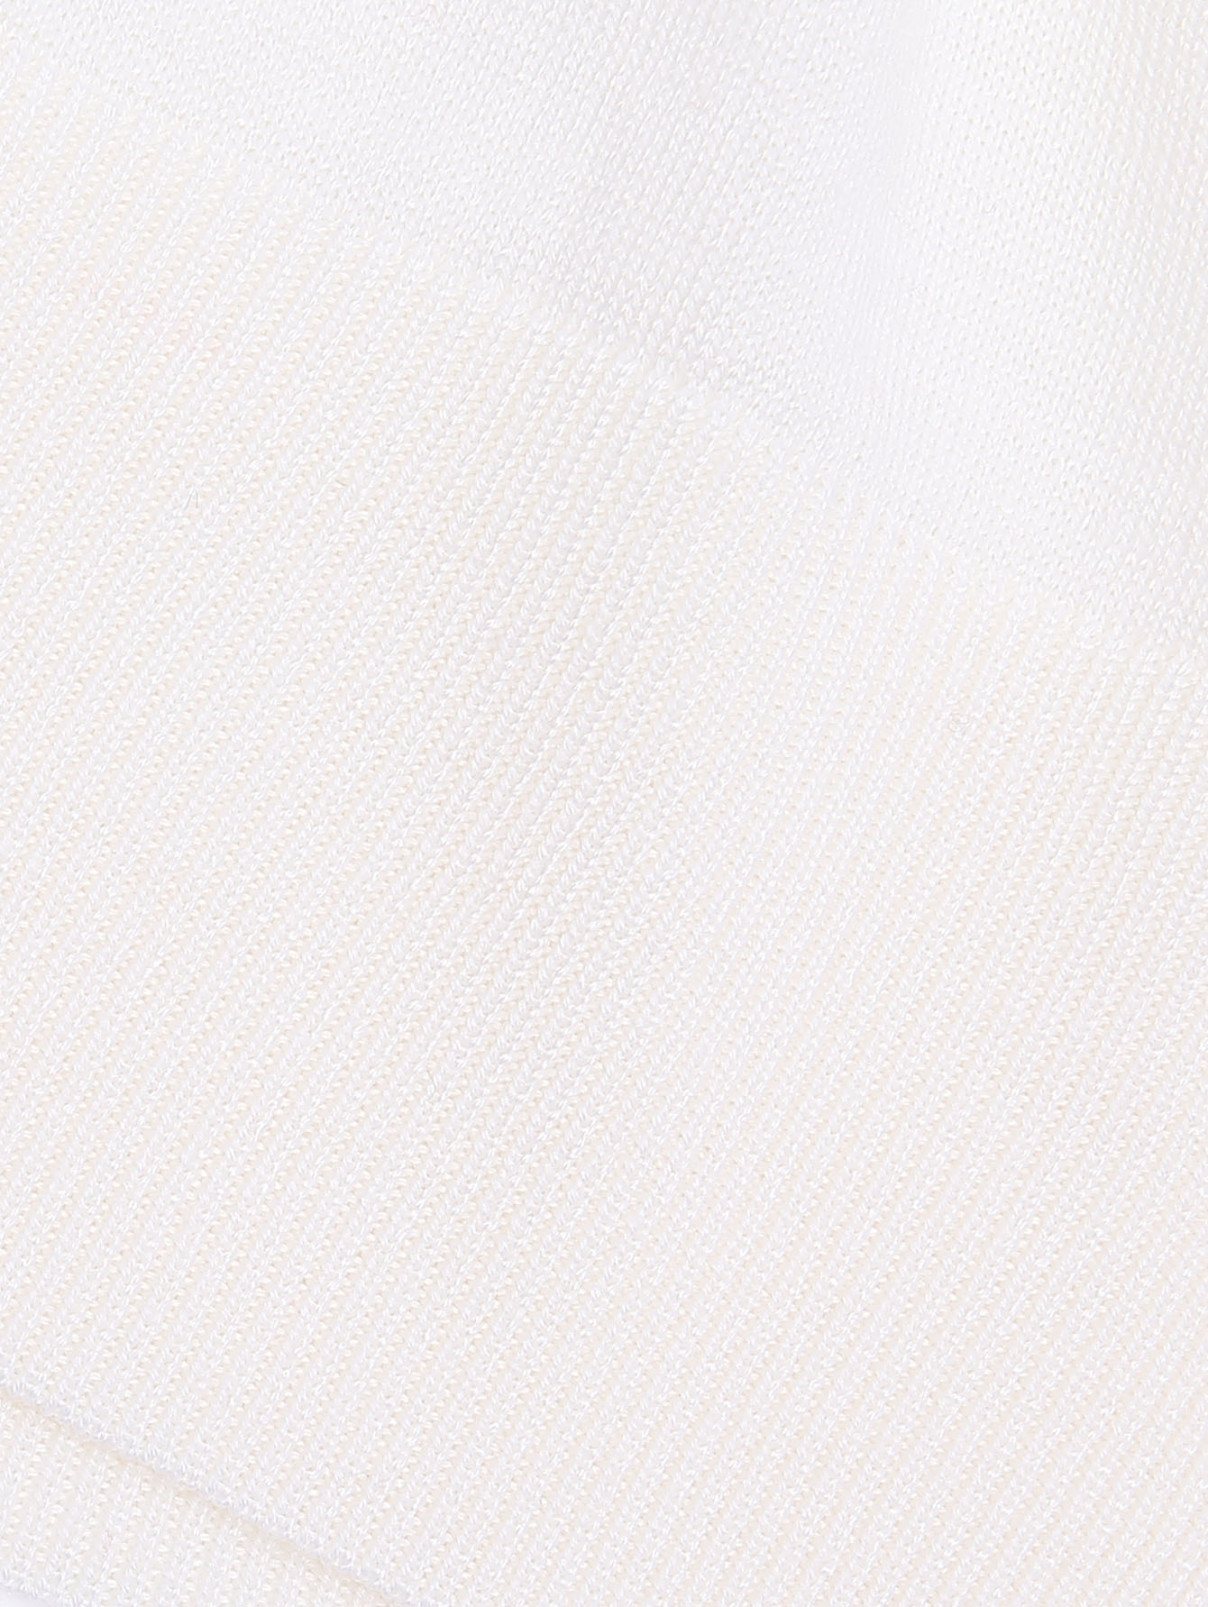 Джемпер из шерсти и шелка Piacenza Cashmere  –  Деталь  – Цвет:  Бежевый